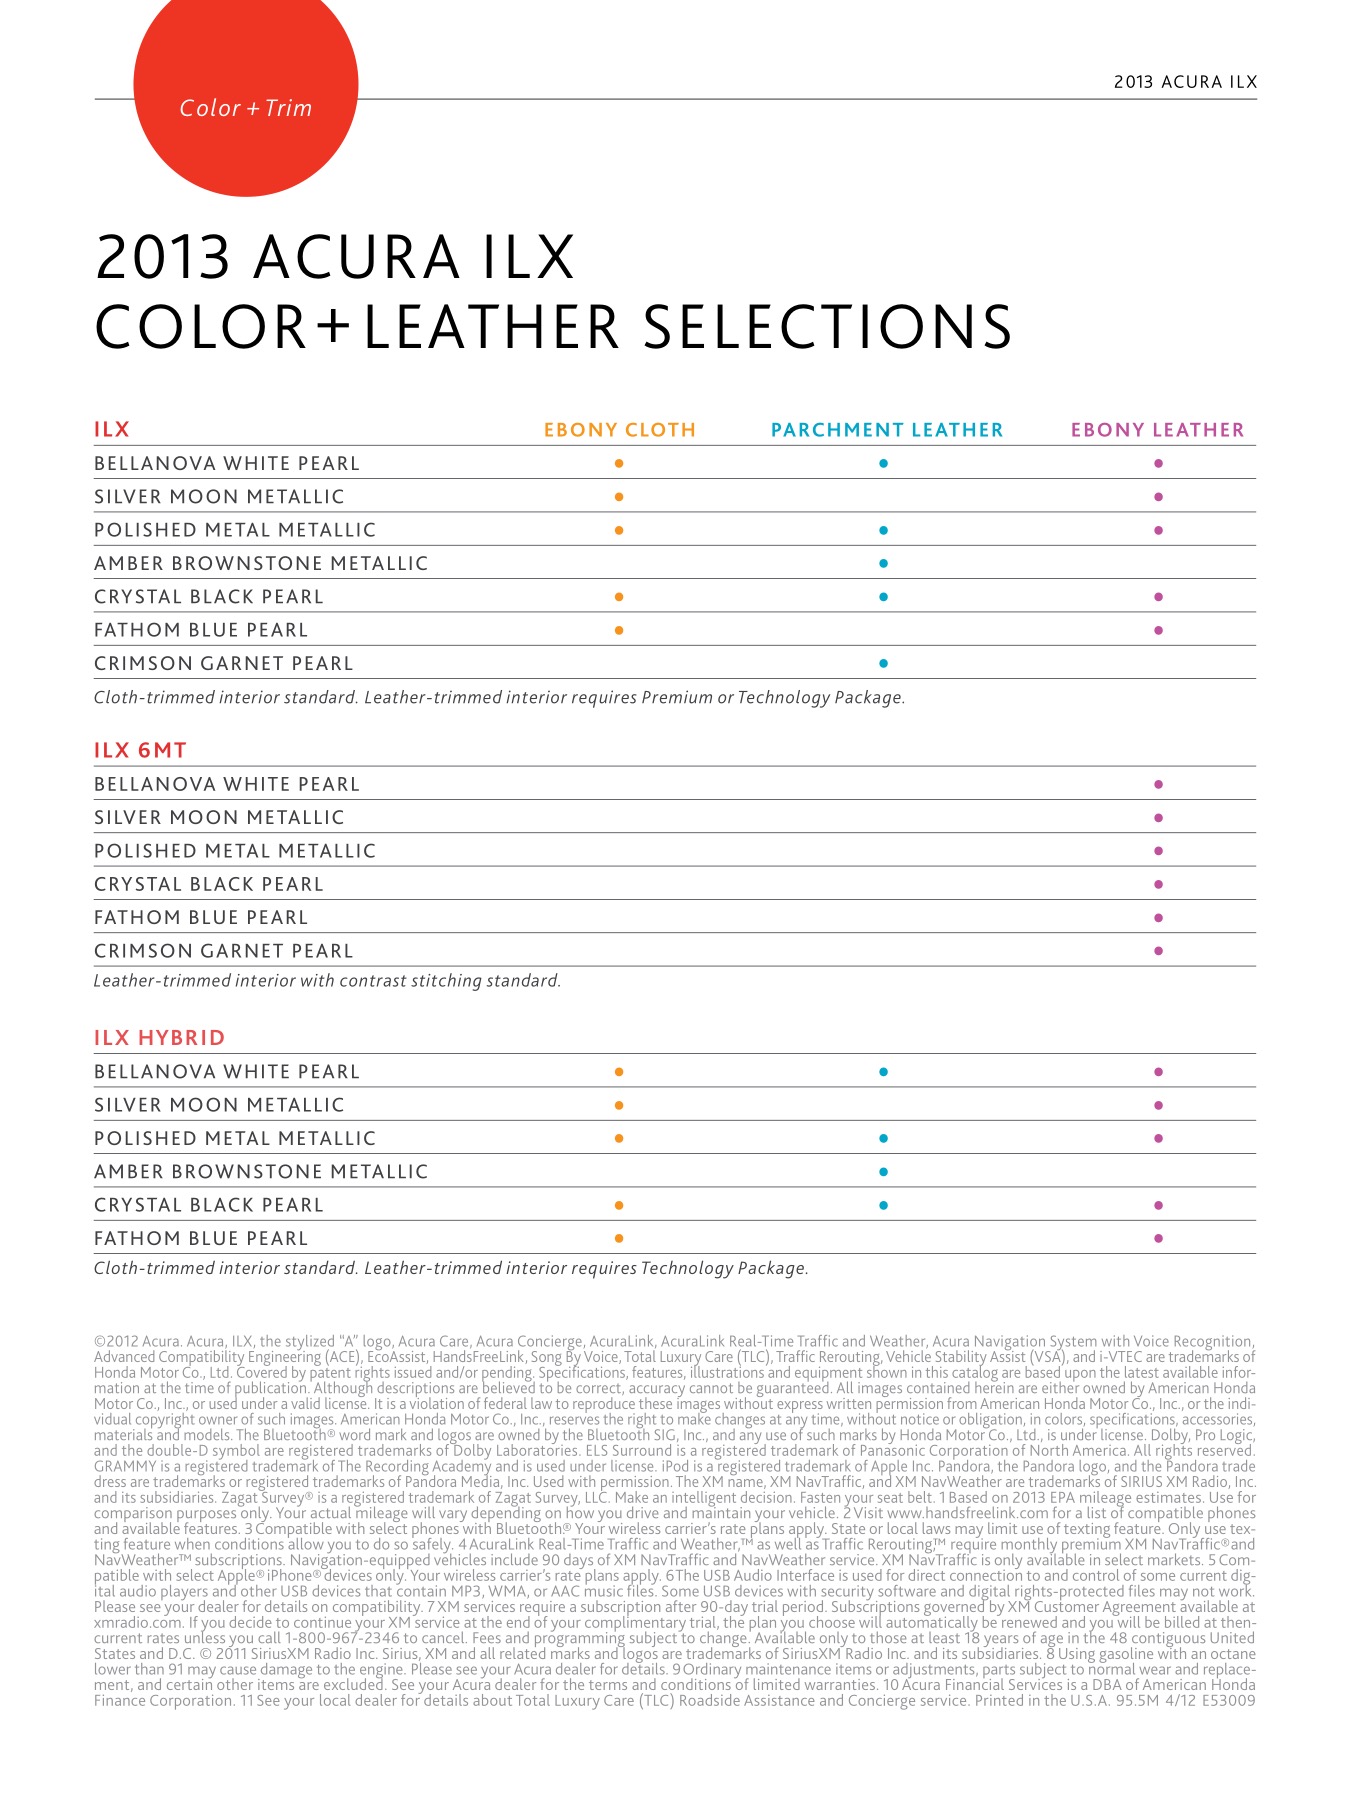 2013 Acura ILX Brochure Page 12